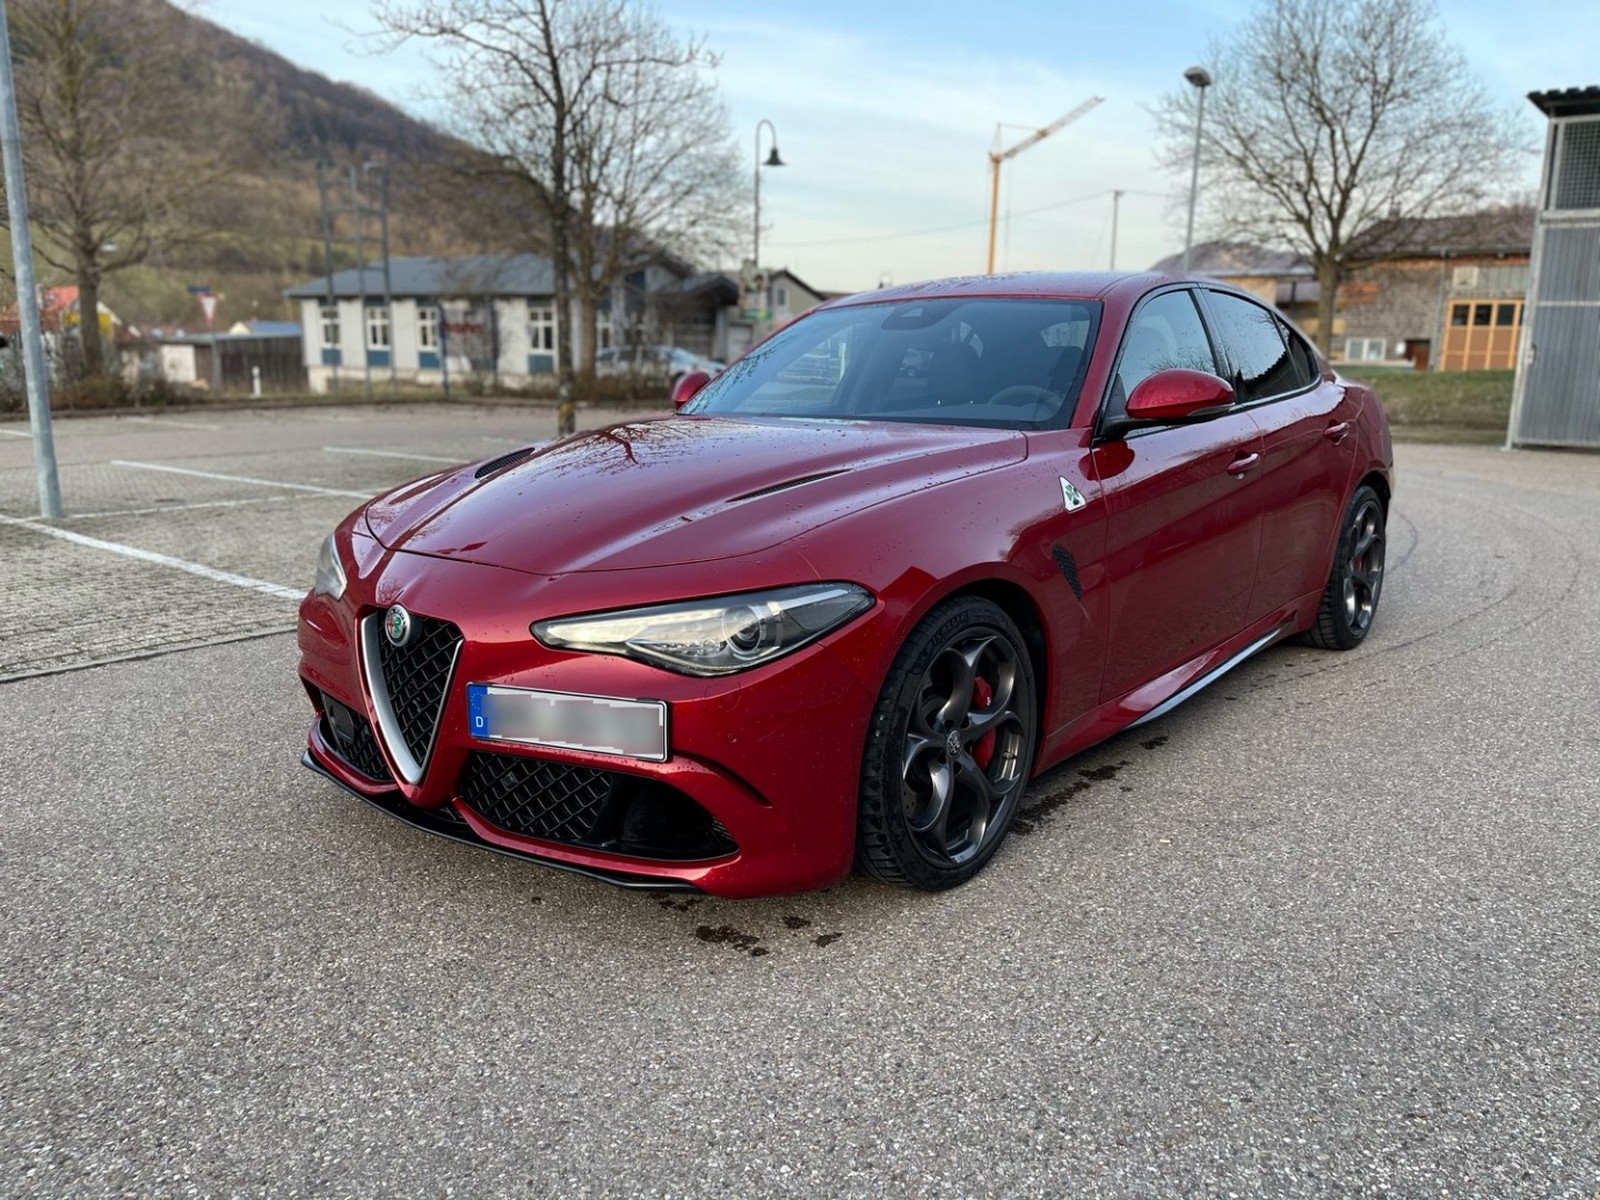 Alfa Romeo Giulia Quadrifoglio gebraucht kaufen in Korb Preis